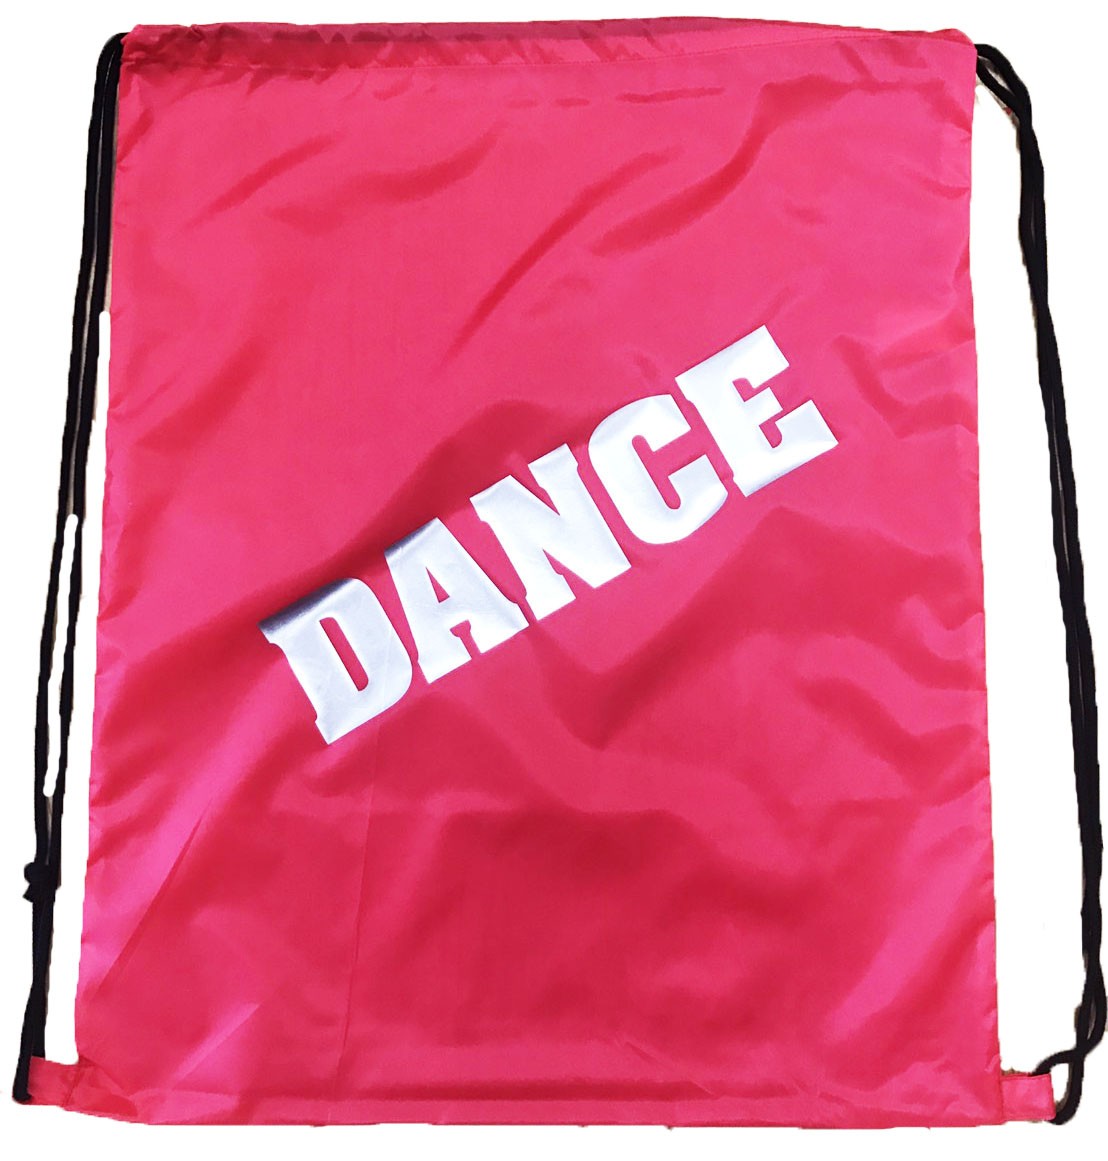 DANCE rucksack type laundry bag red Cheer goods 